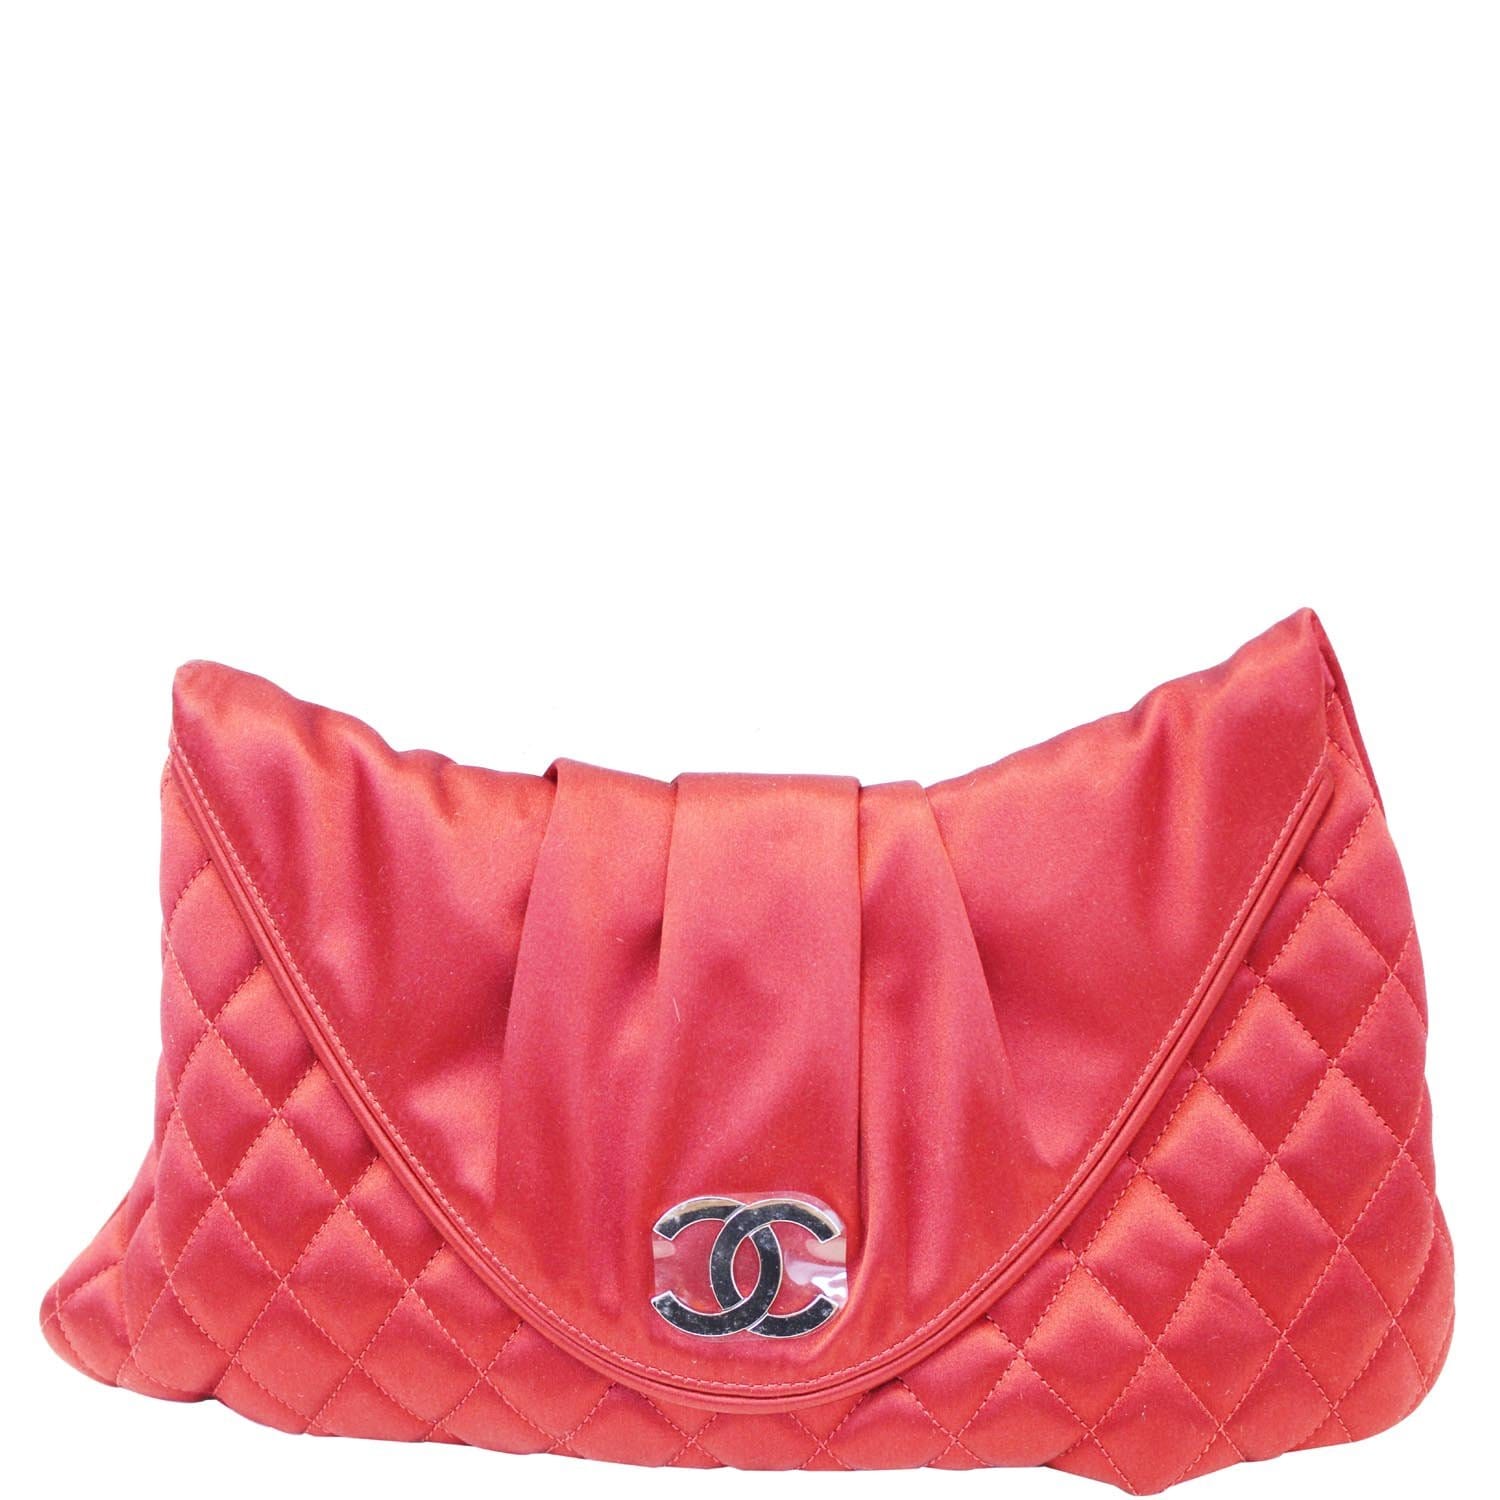 Chanel Red Half Moon Chain Shoulder Bag